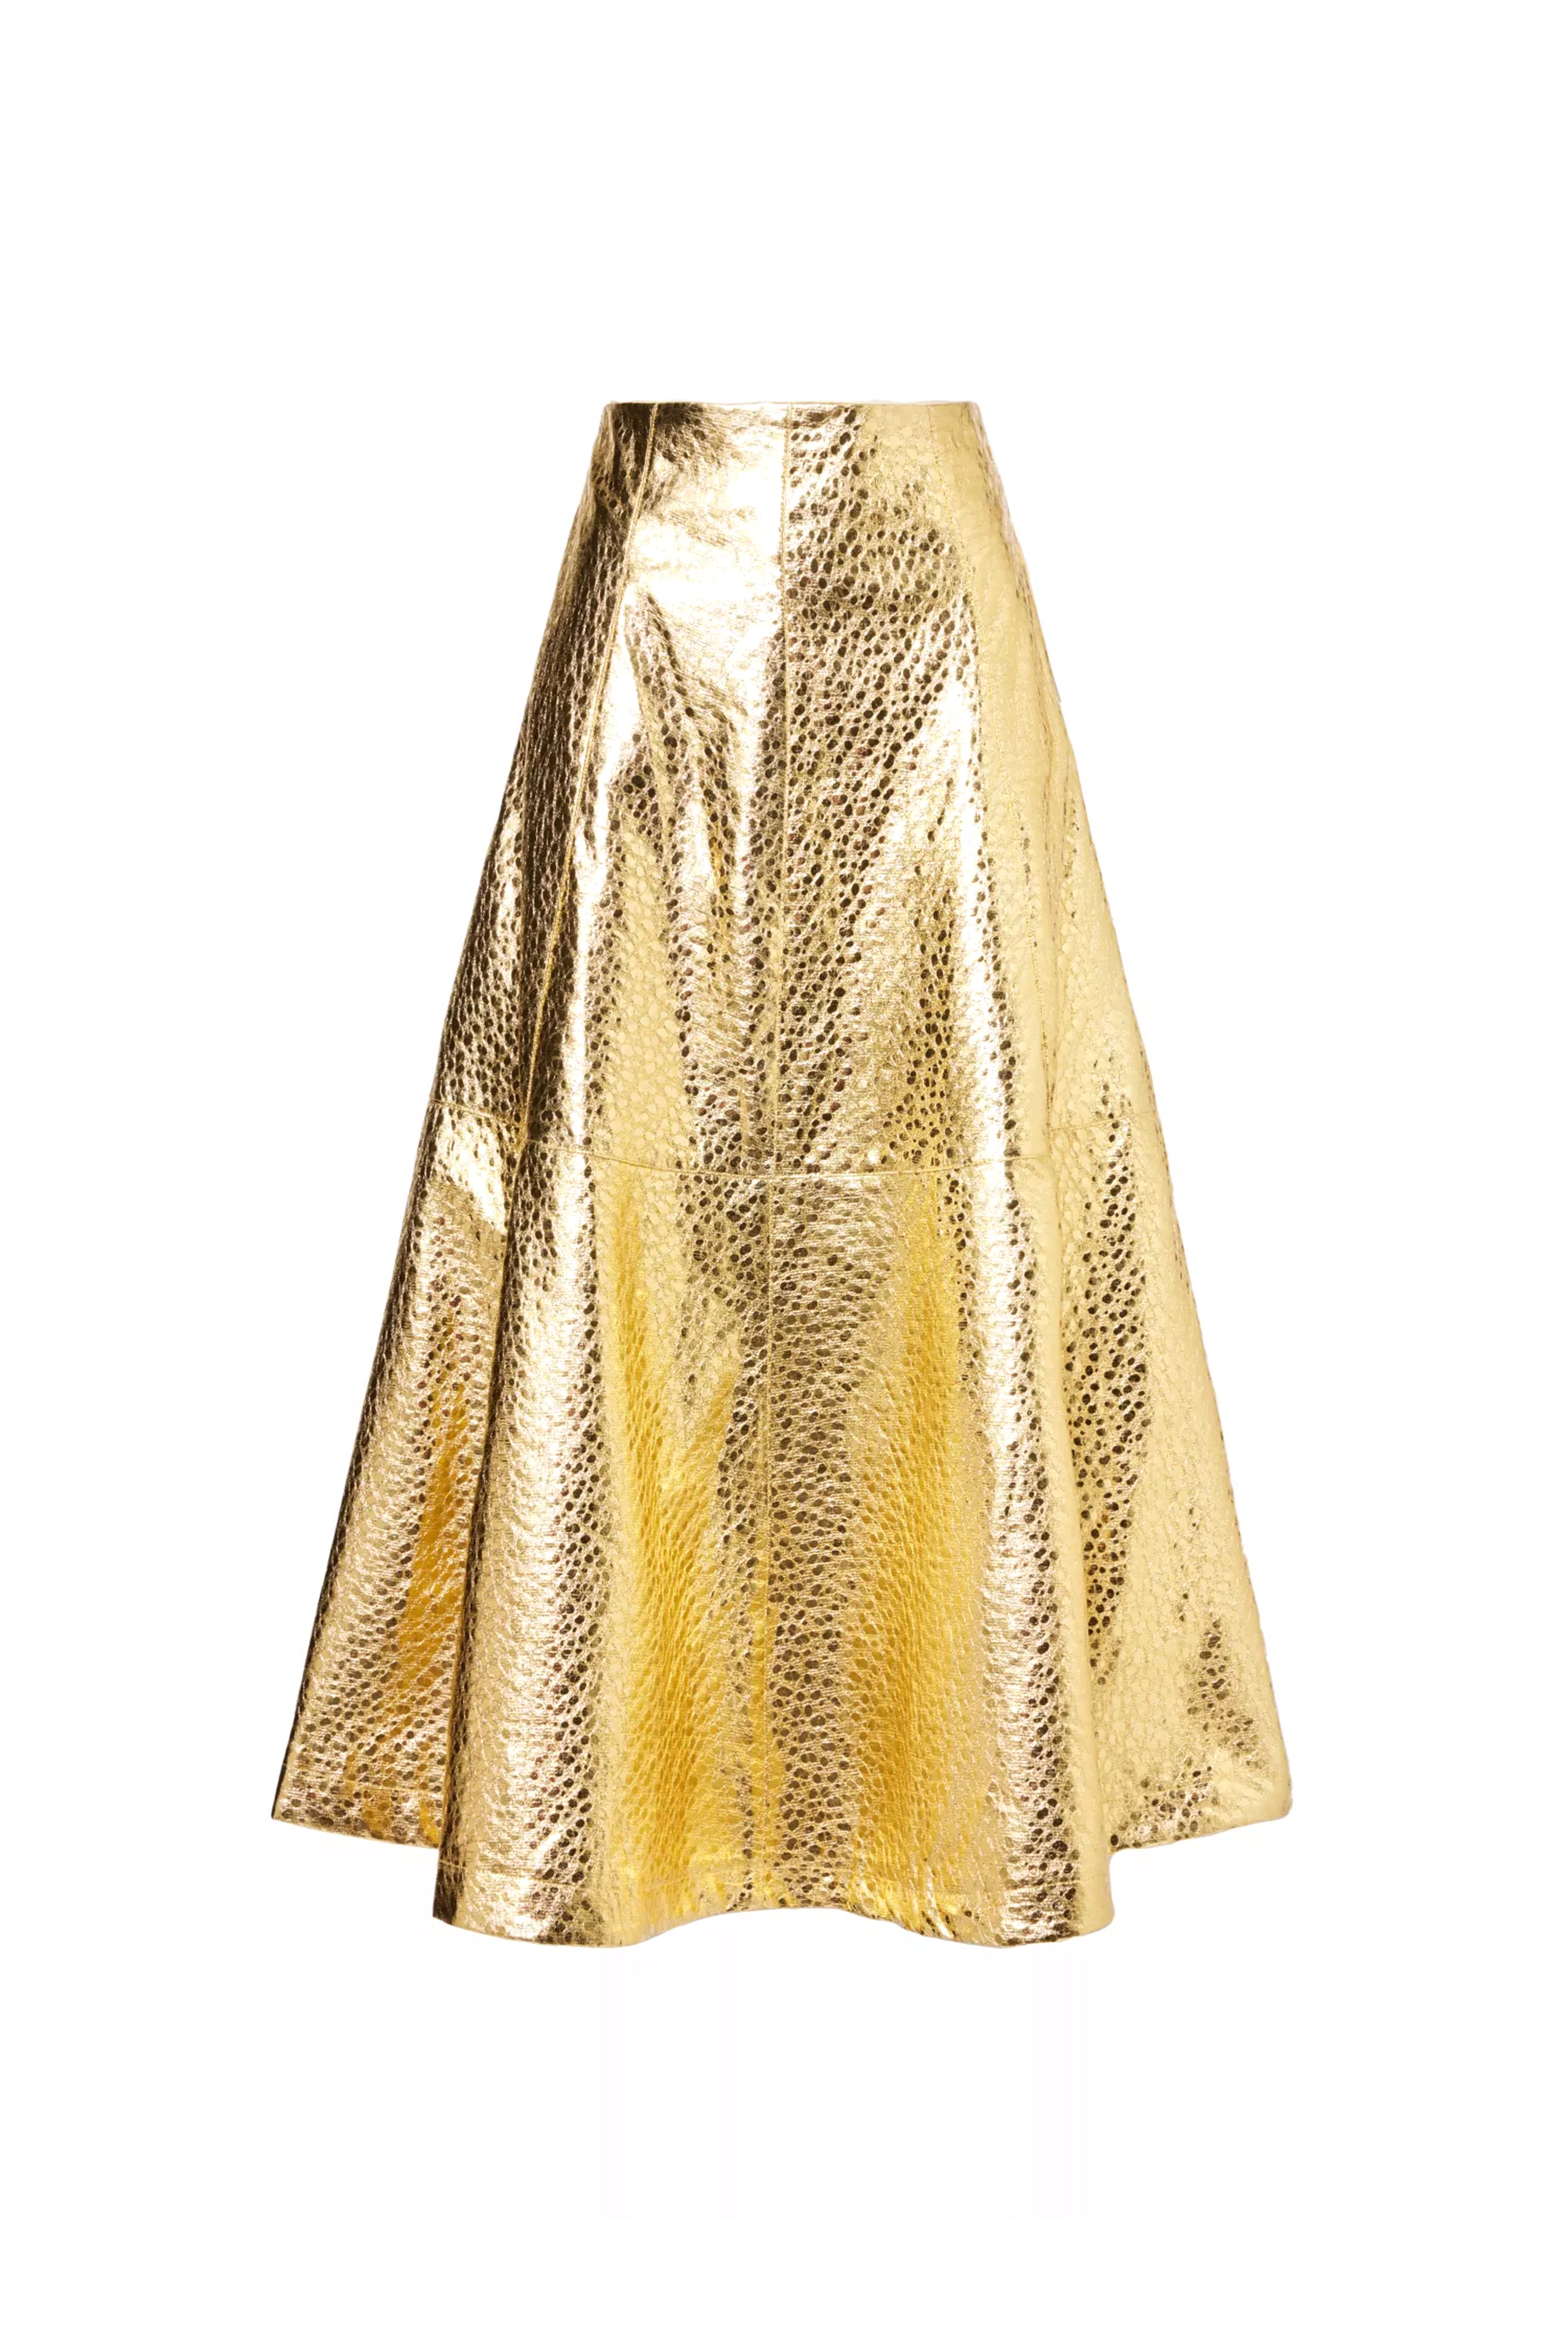 Phoebe Gold Metallic Maxi Skirt